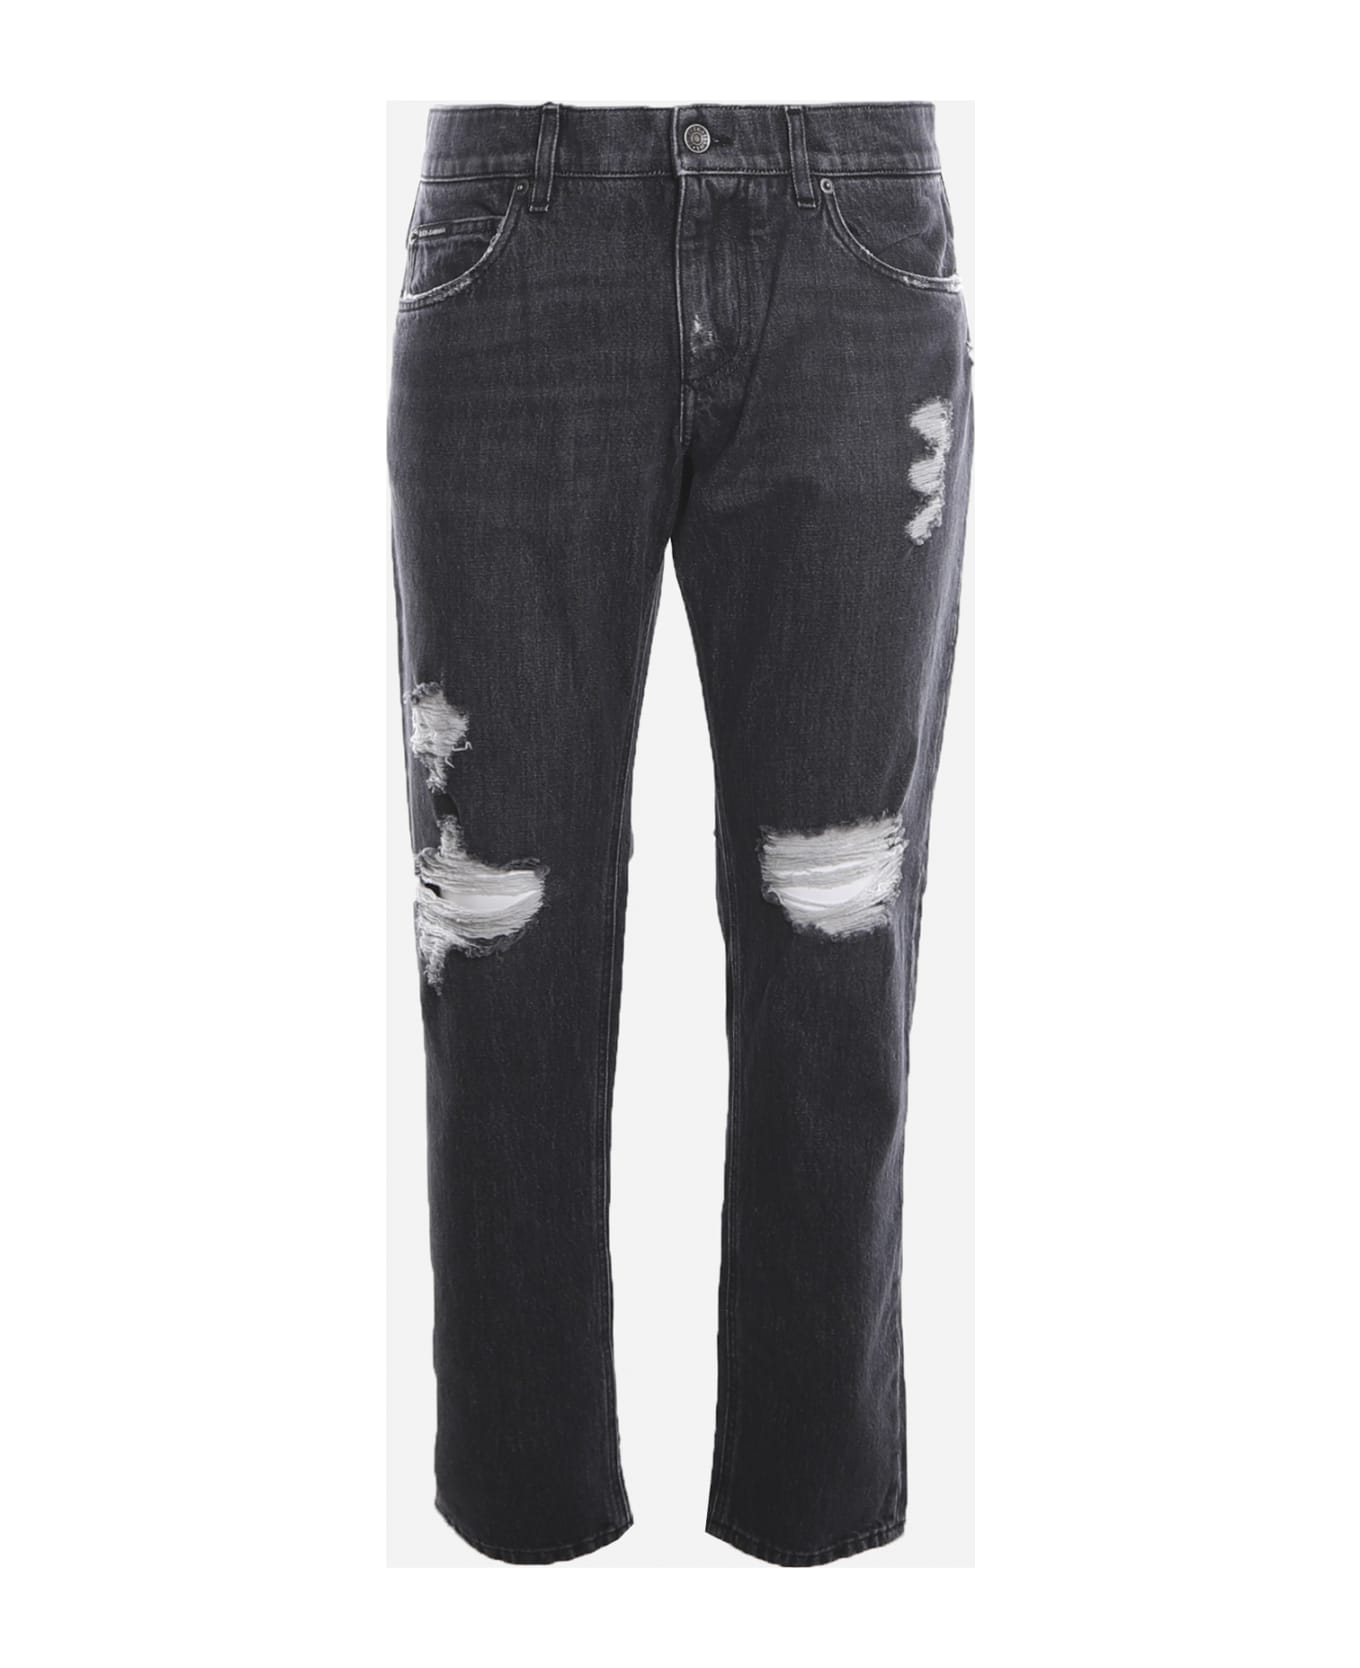 Dolce & Gabbana Distressed Cotton Denim Jeans - Black デニム